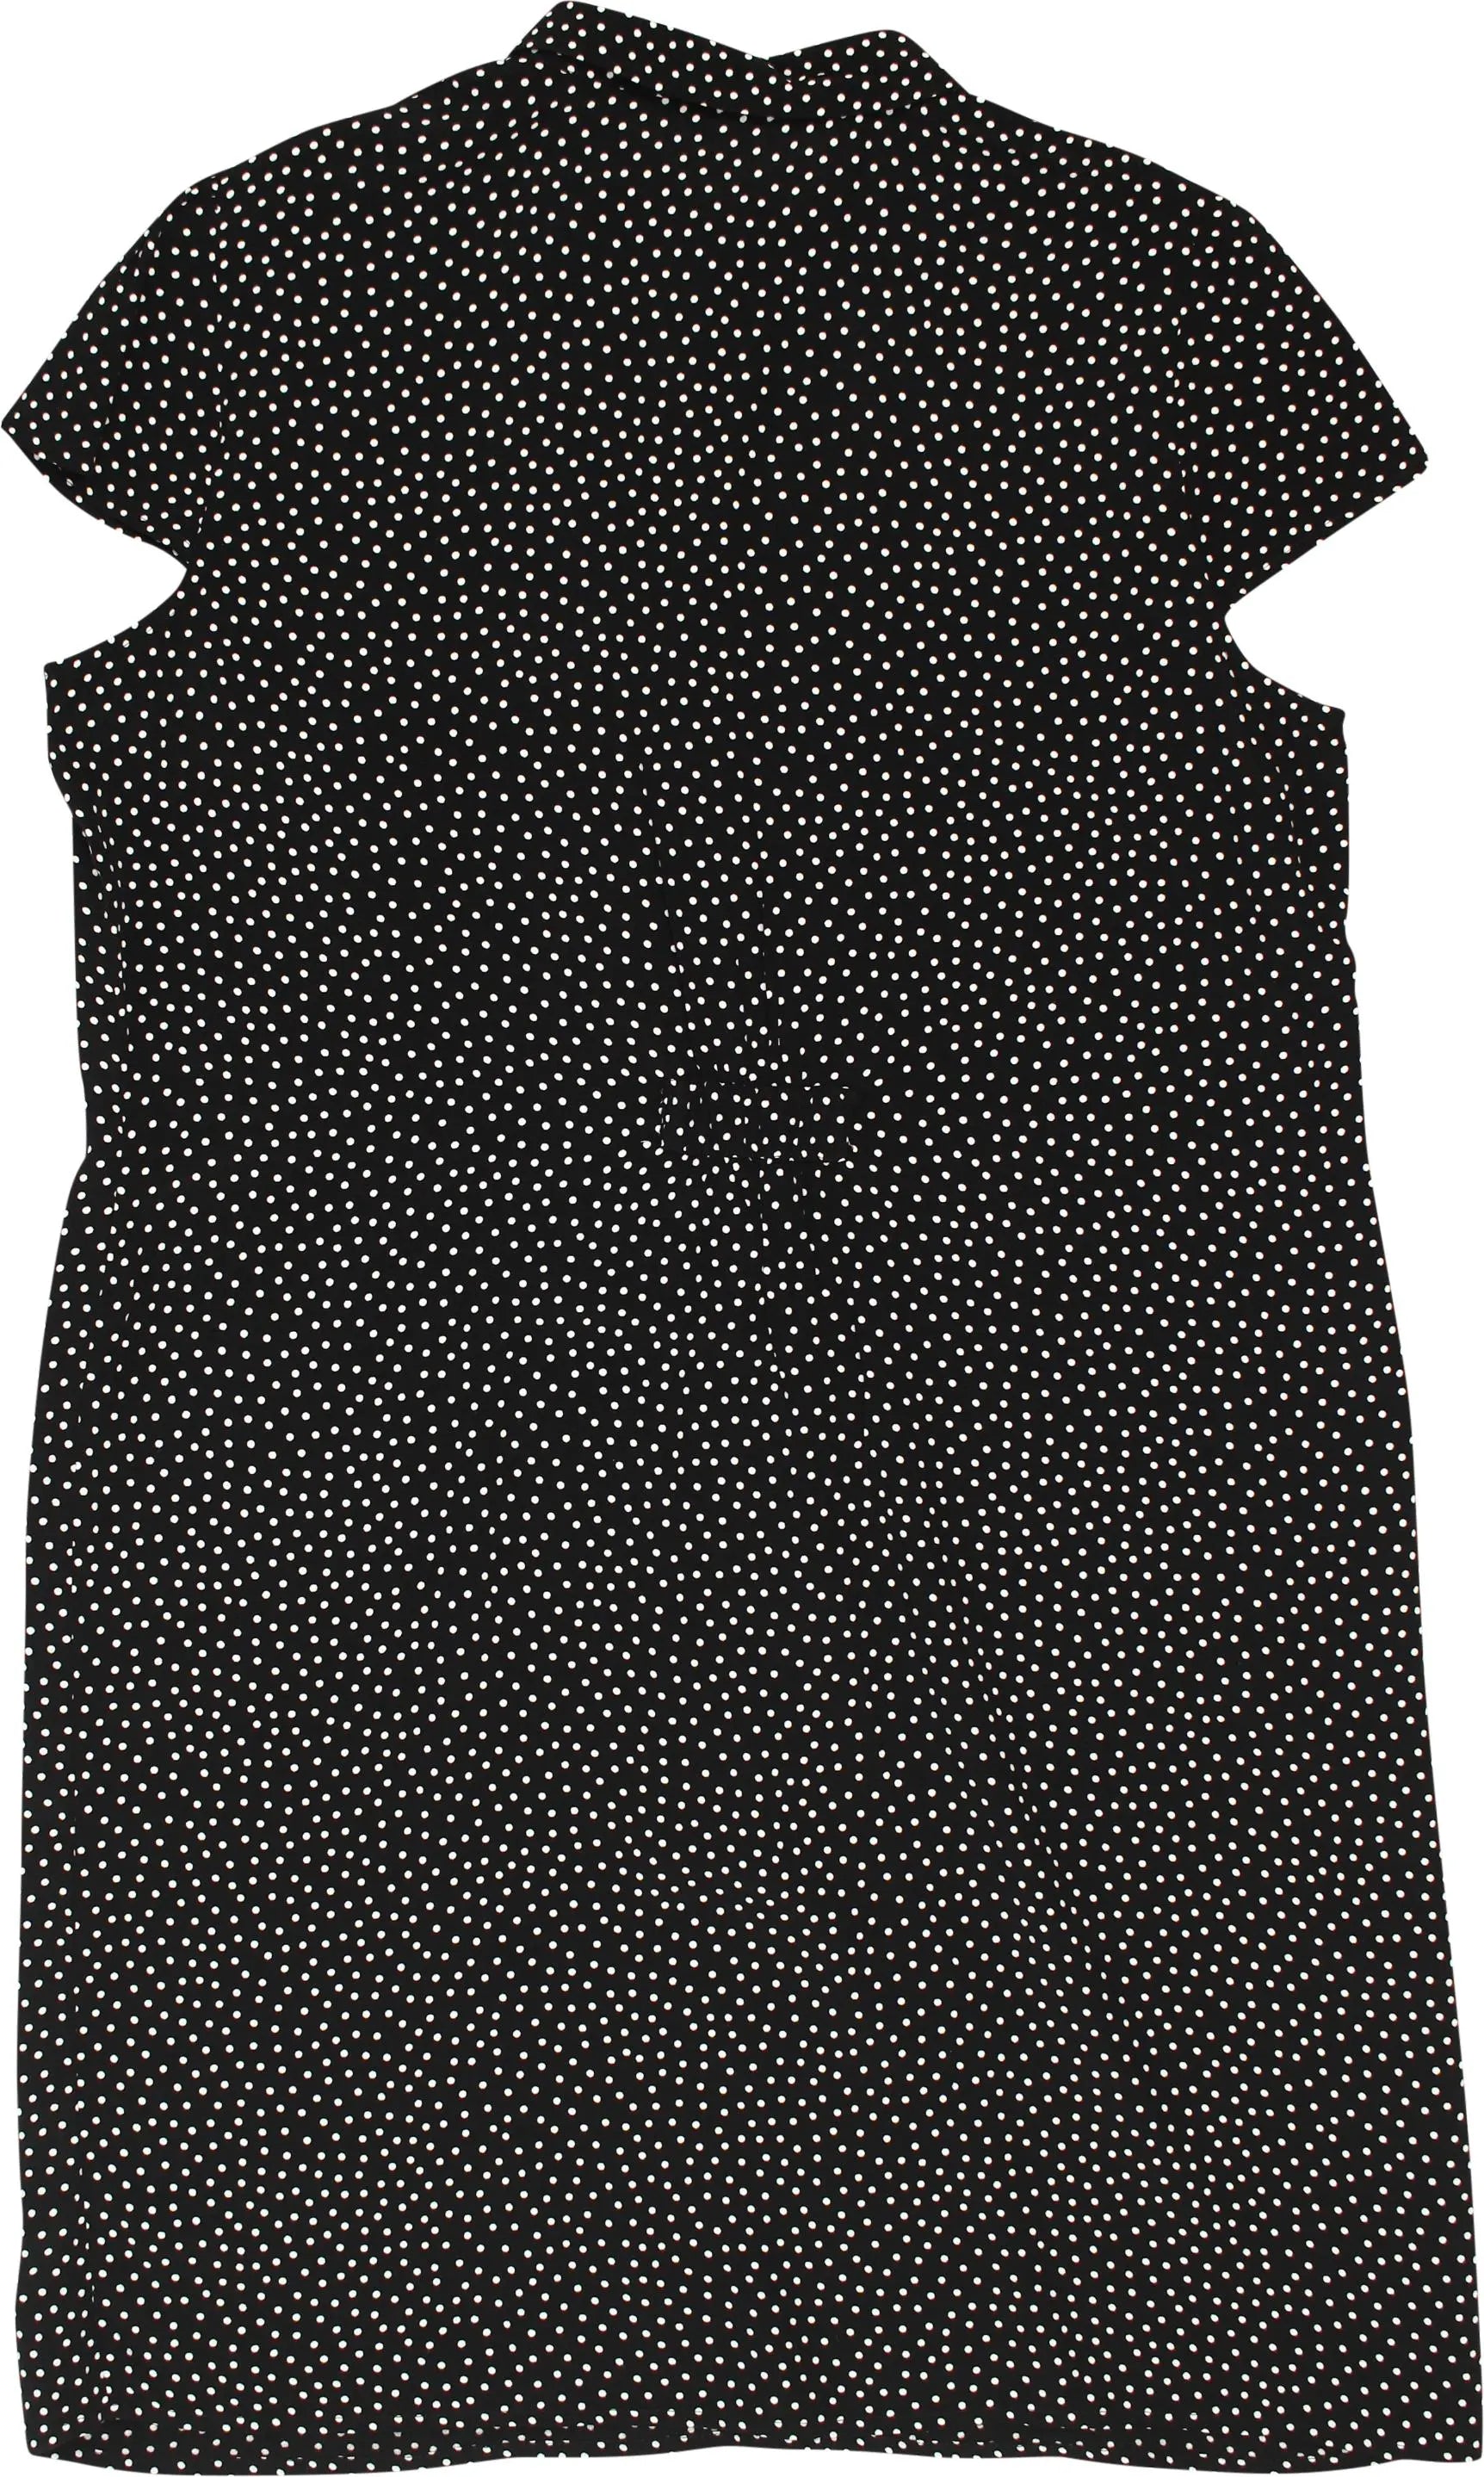 Esprit - Polkadot Dress- ThriftTale.com - Vintage and second handclothing